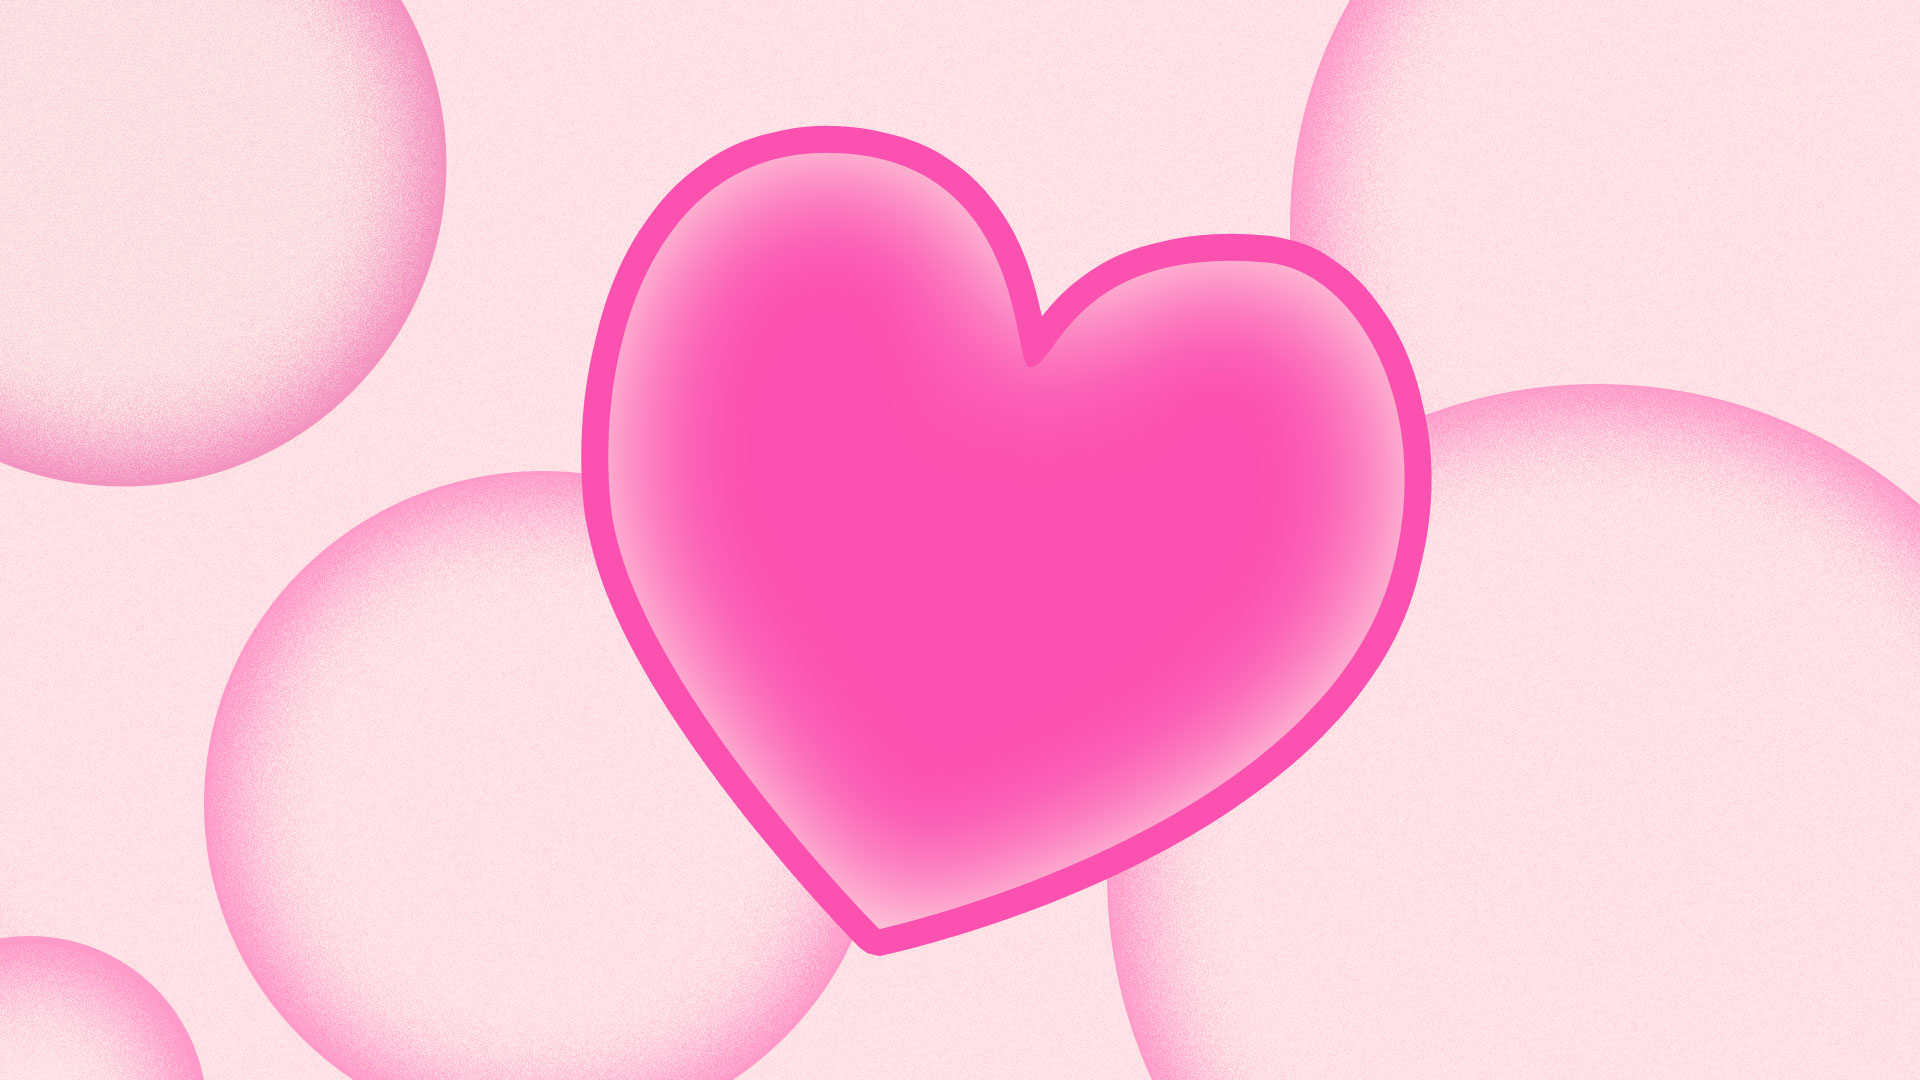 Heart Background Stock Illustrations RoyaltyFree Vector Graphics  Clip  Art  iStock  Heart Red heart background Love background